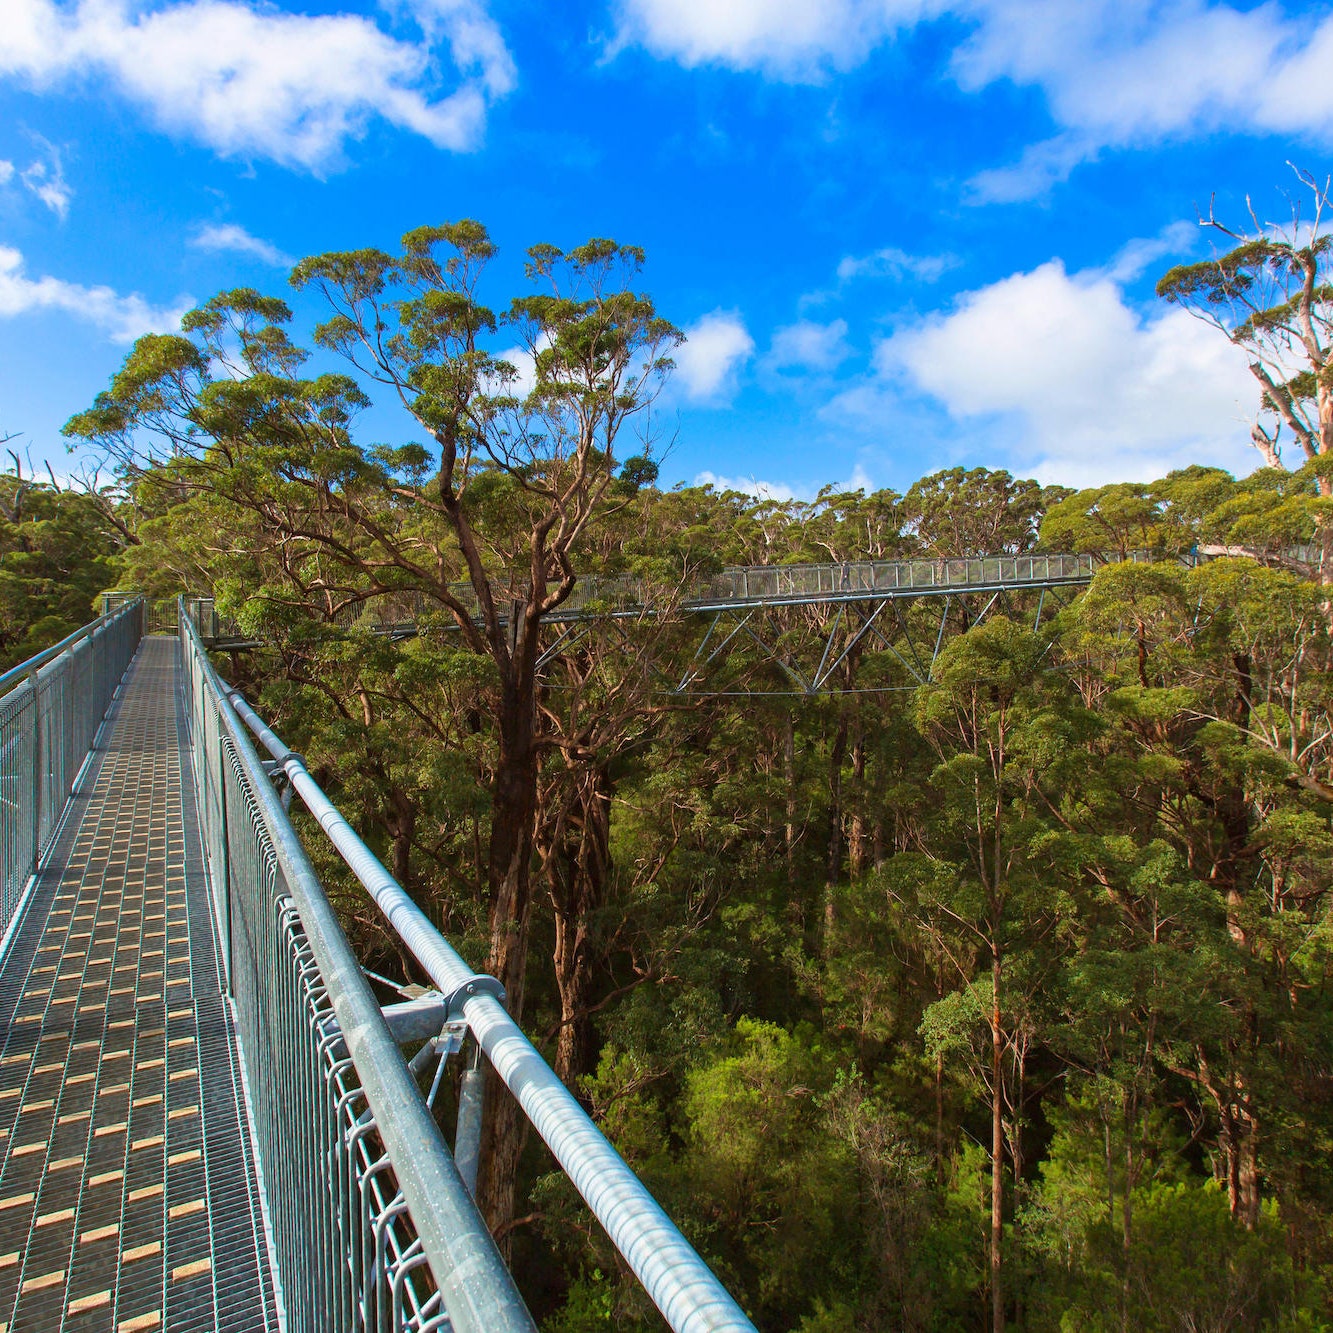 Caminar sobre árboles gigantes es posible en este bosque australiano